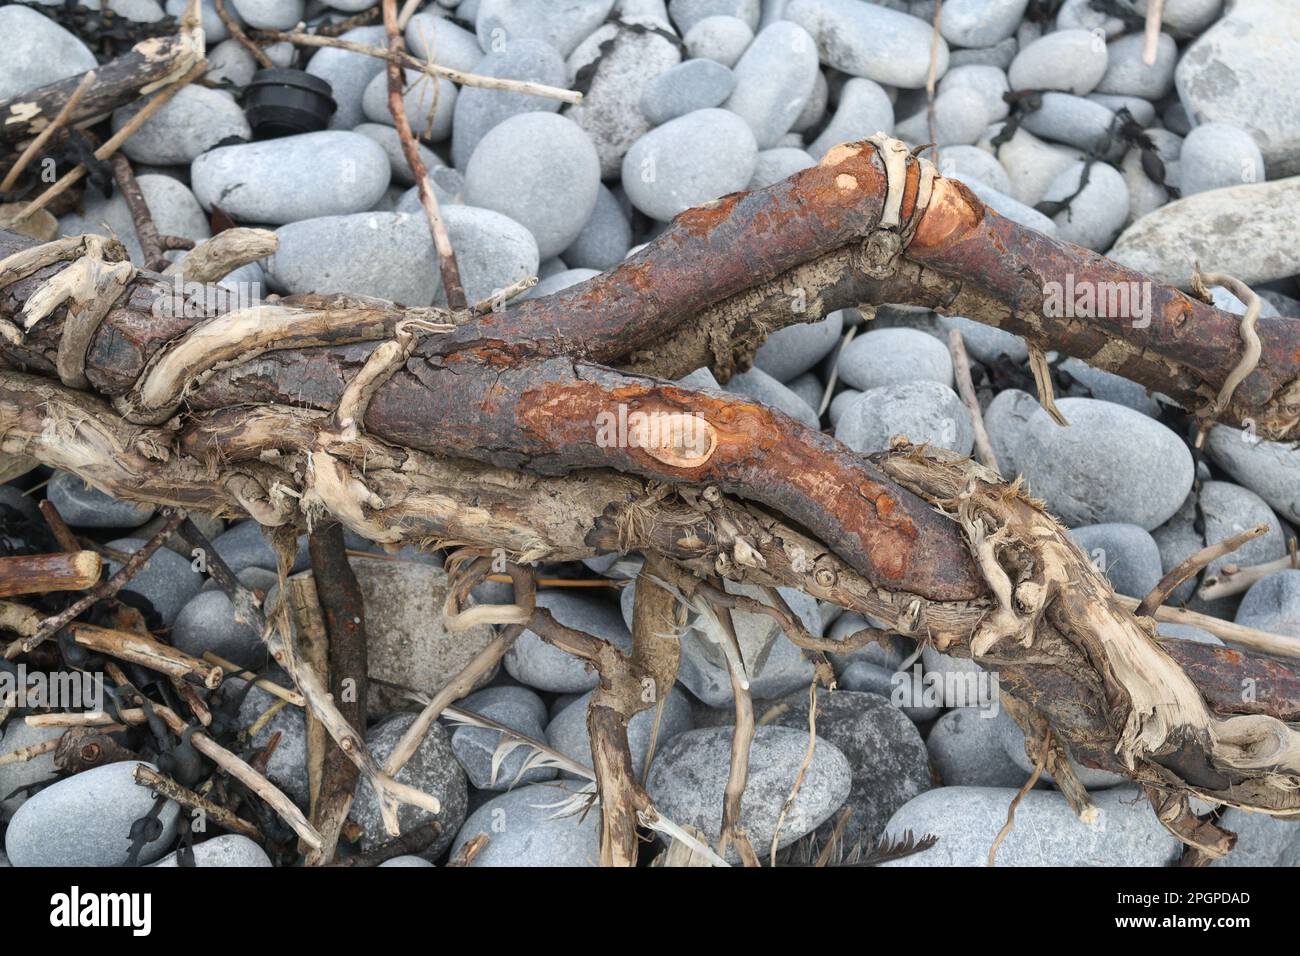 Drift wood washed up on a rocky beach UK Stock Photo